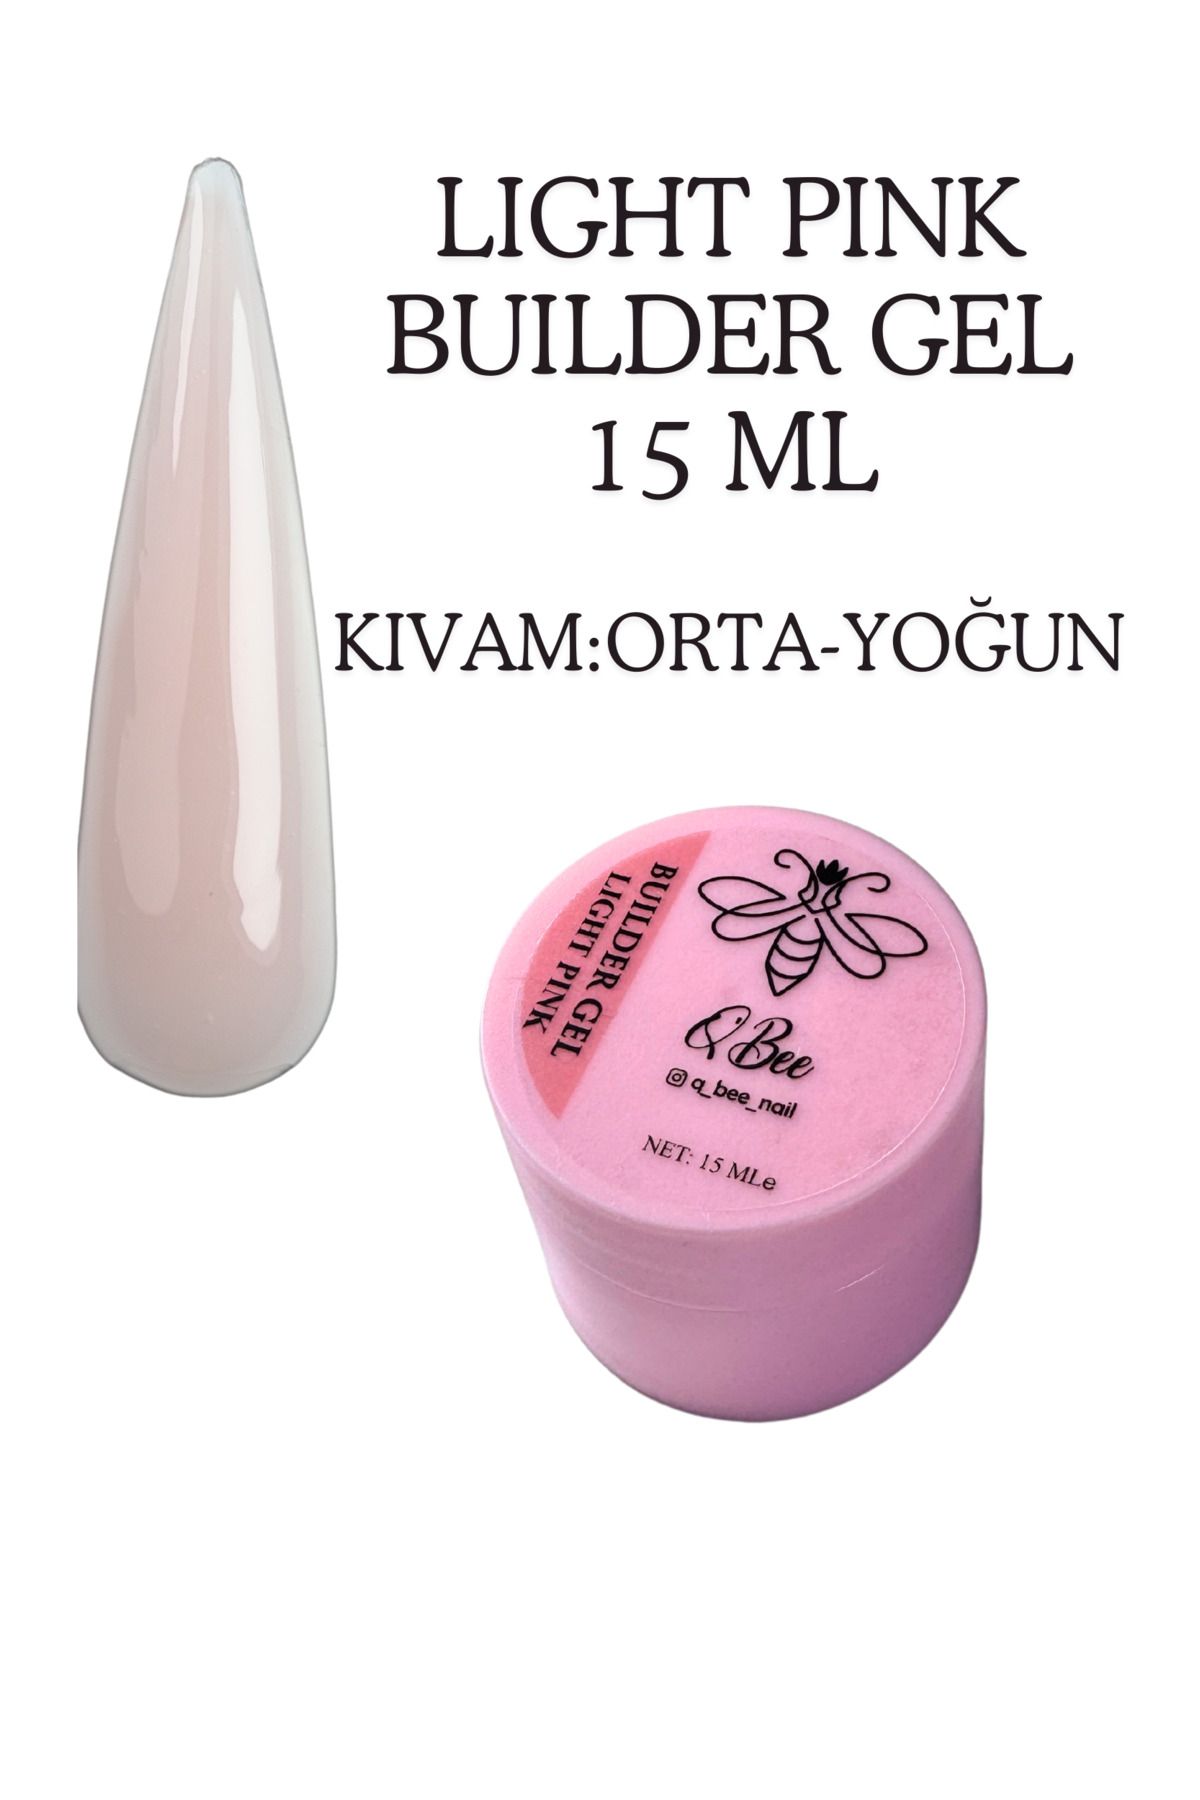 QBEE PROFESSIONAL 15ml Protez Tırnak Jeli Builder Gel Light Pink